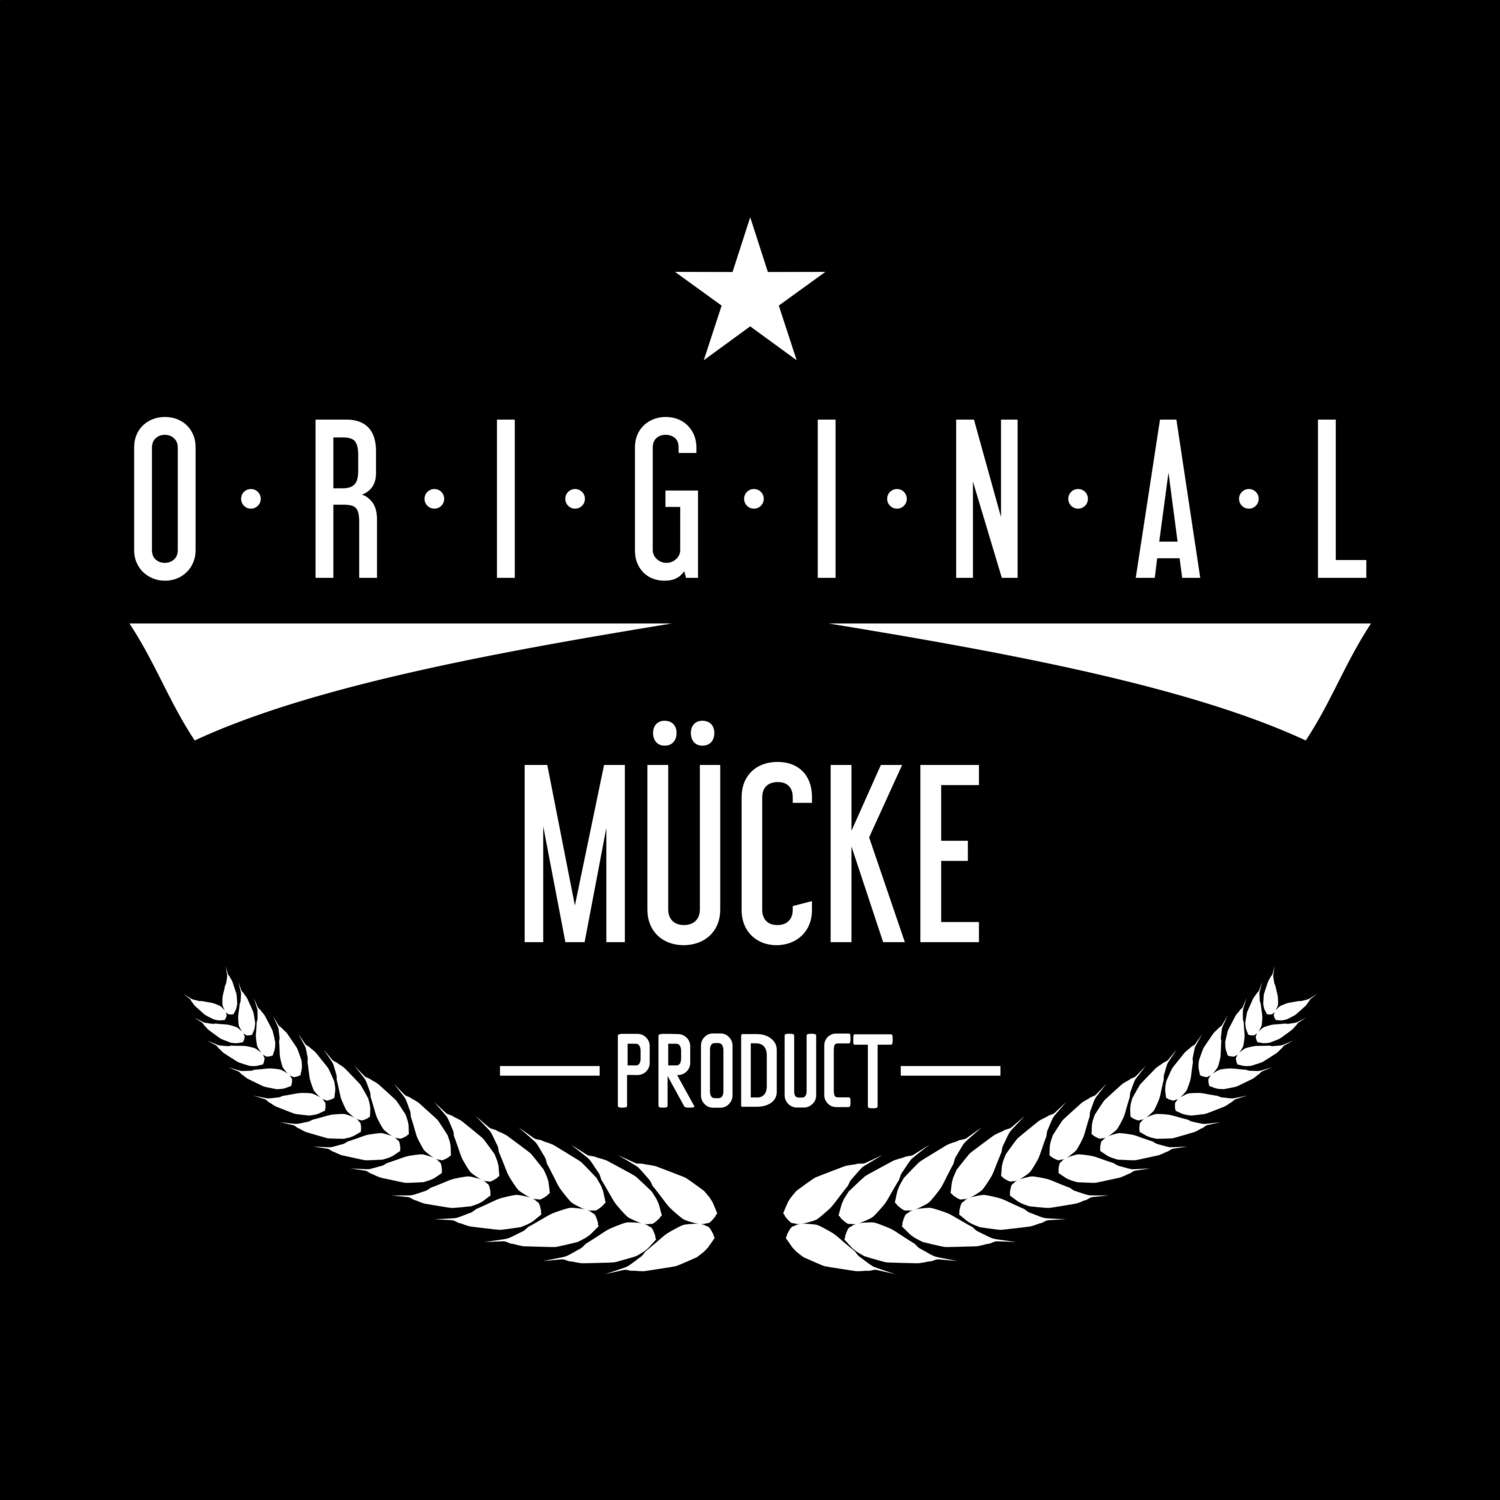 Mücke T-Shirt »Original Product«